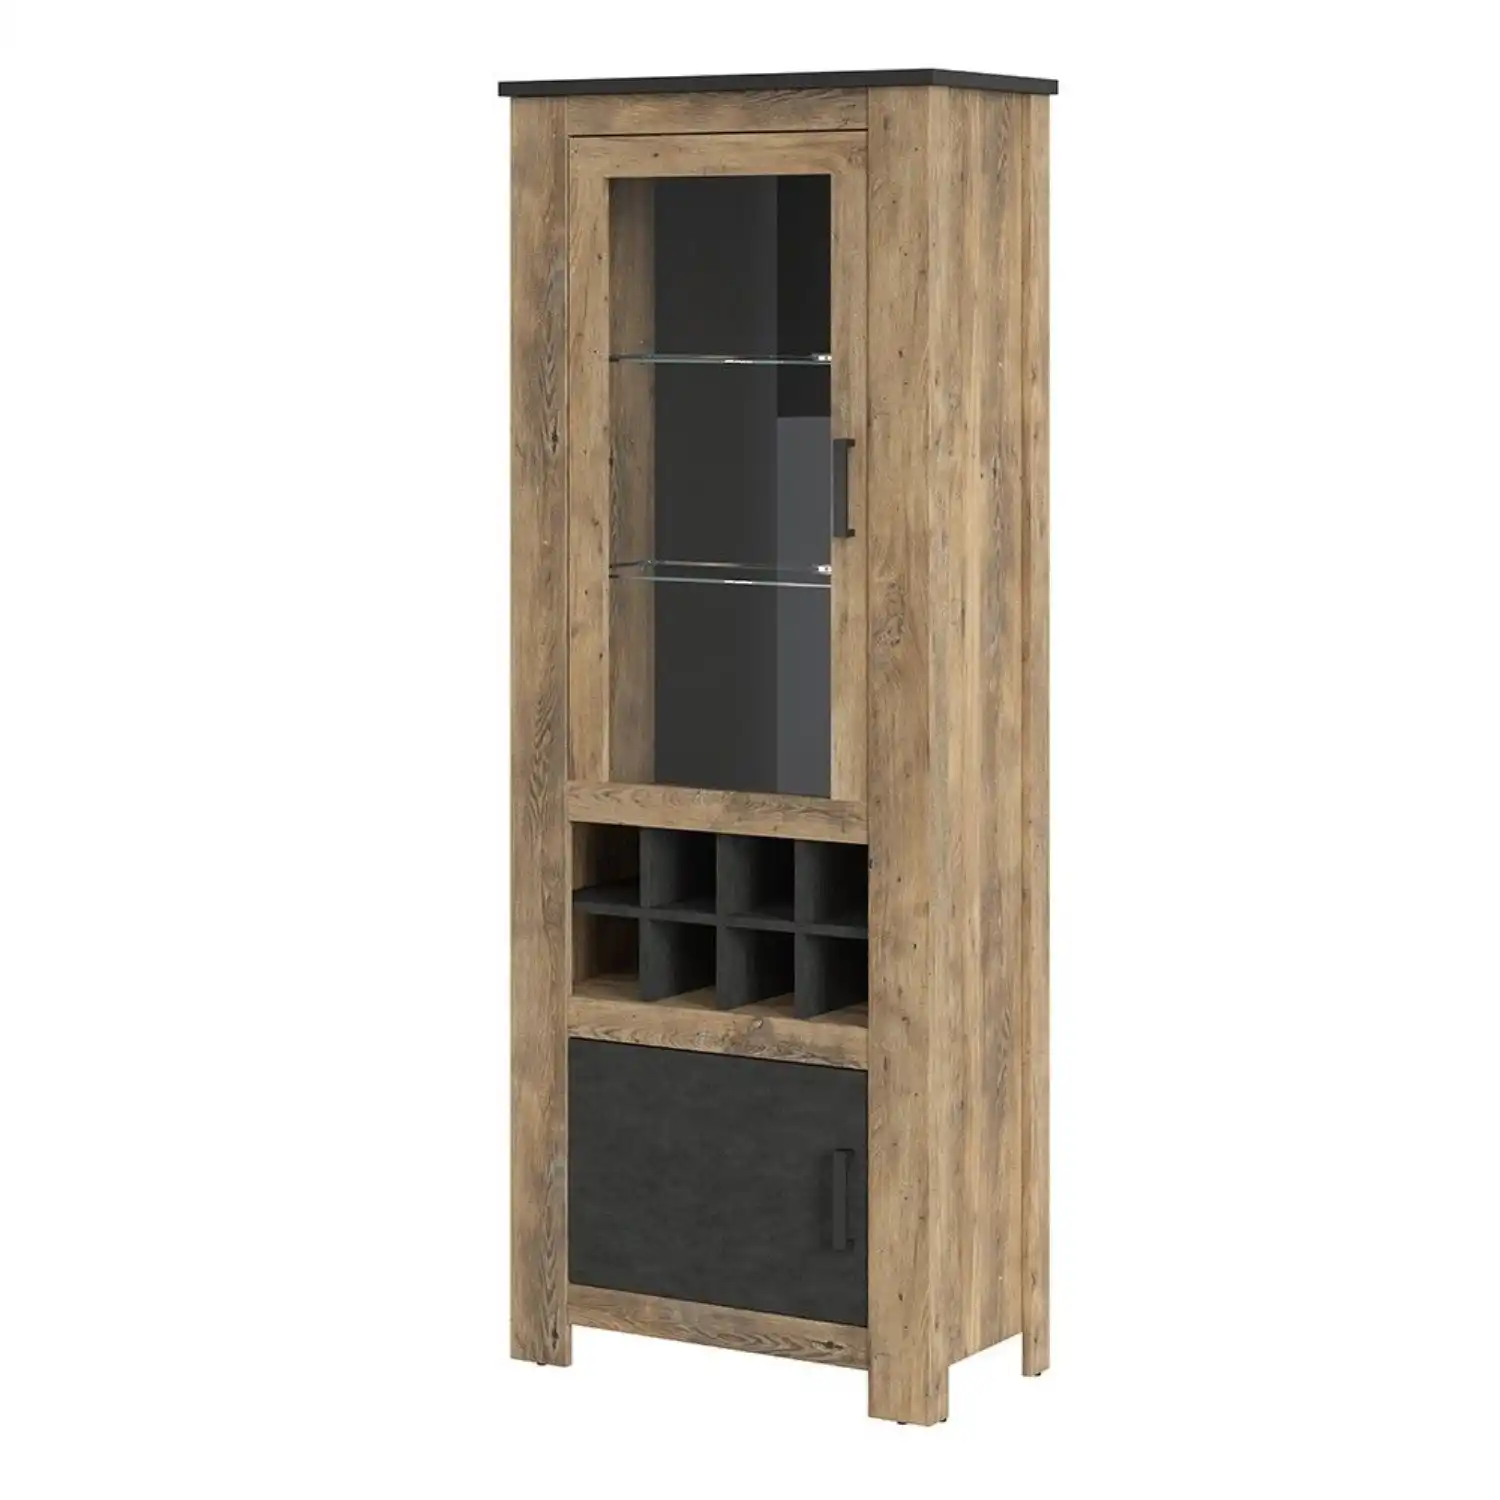 2 door display cabinet With wine rack in Chestnut and Matera Grey